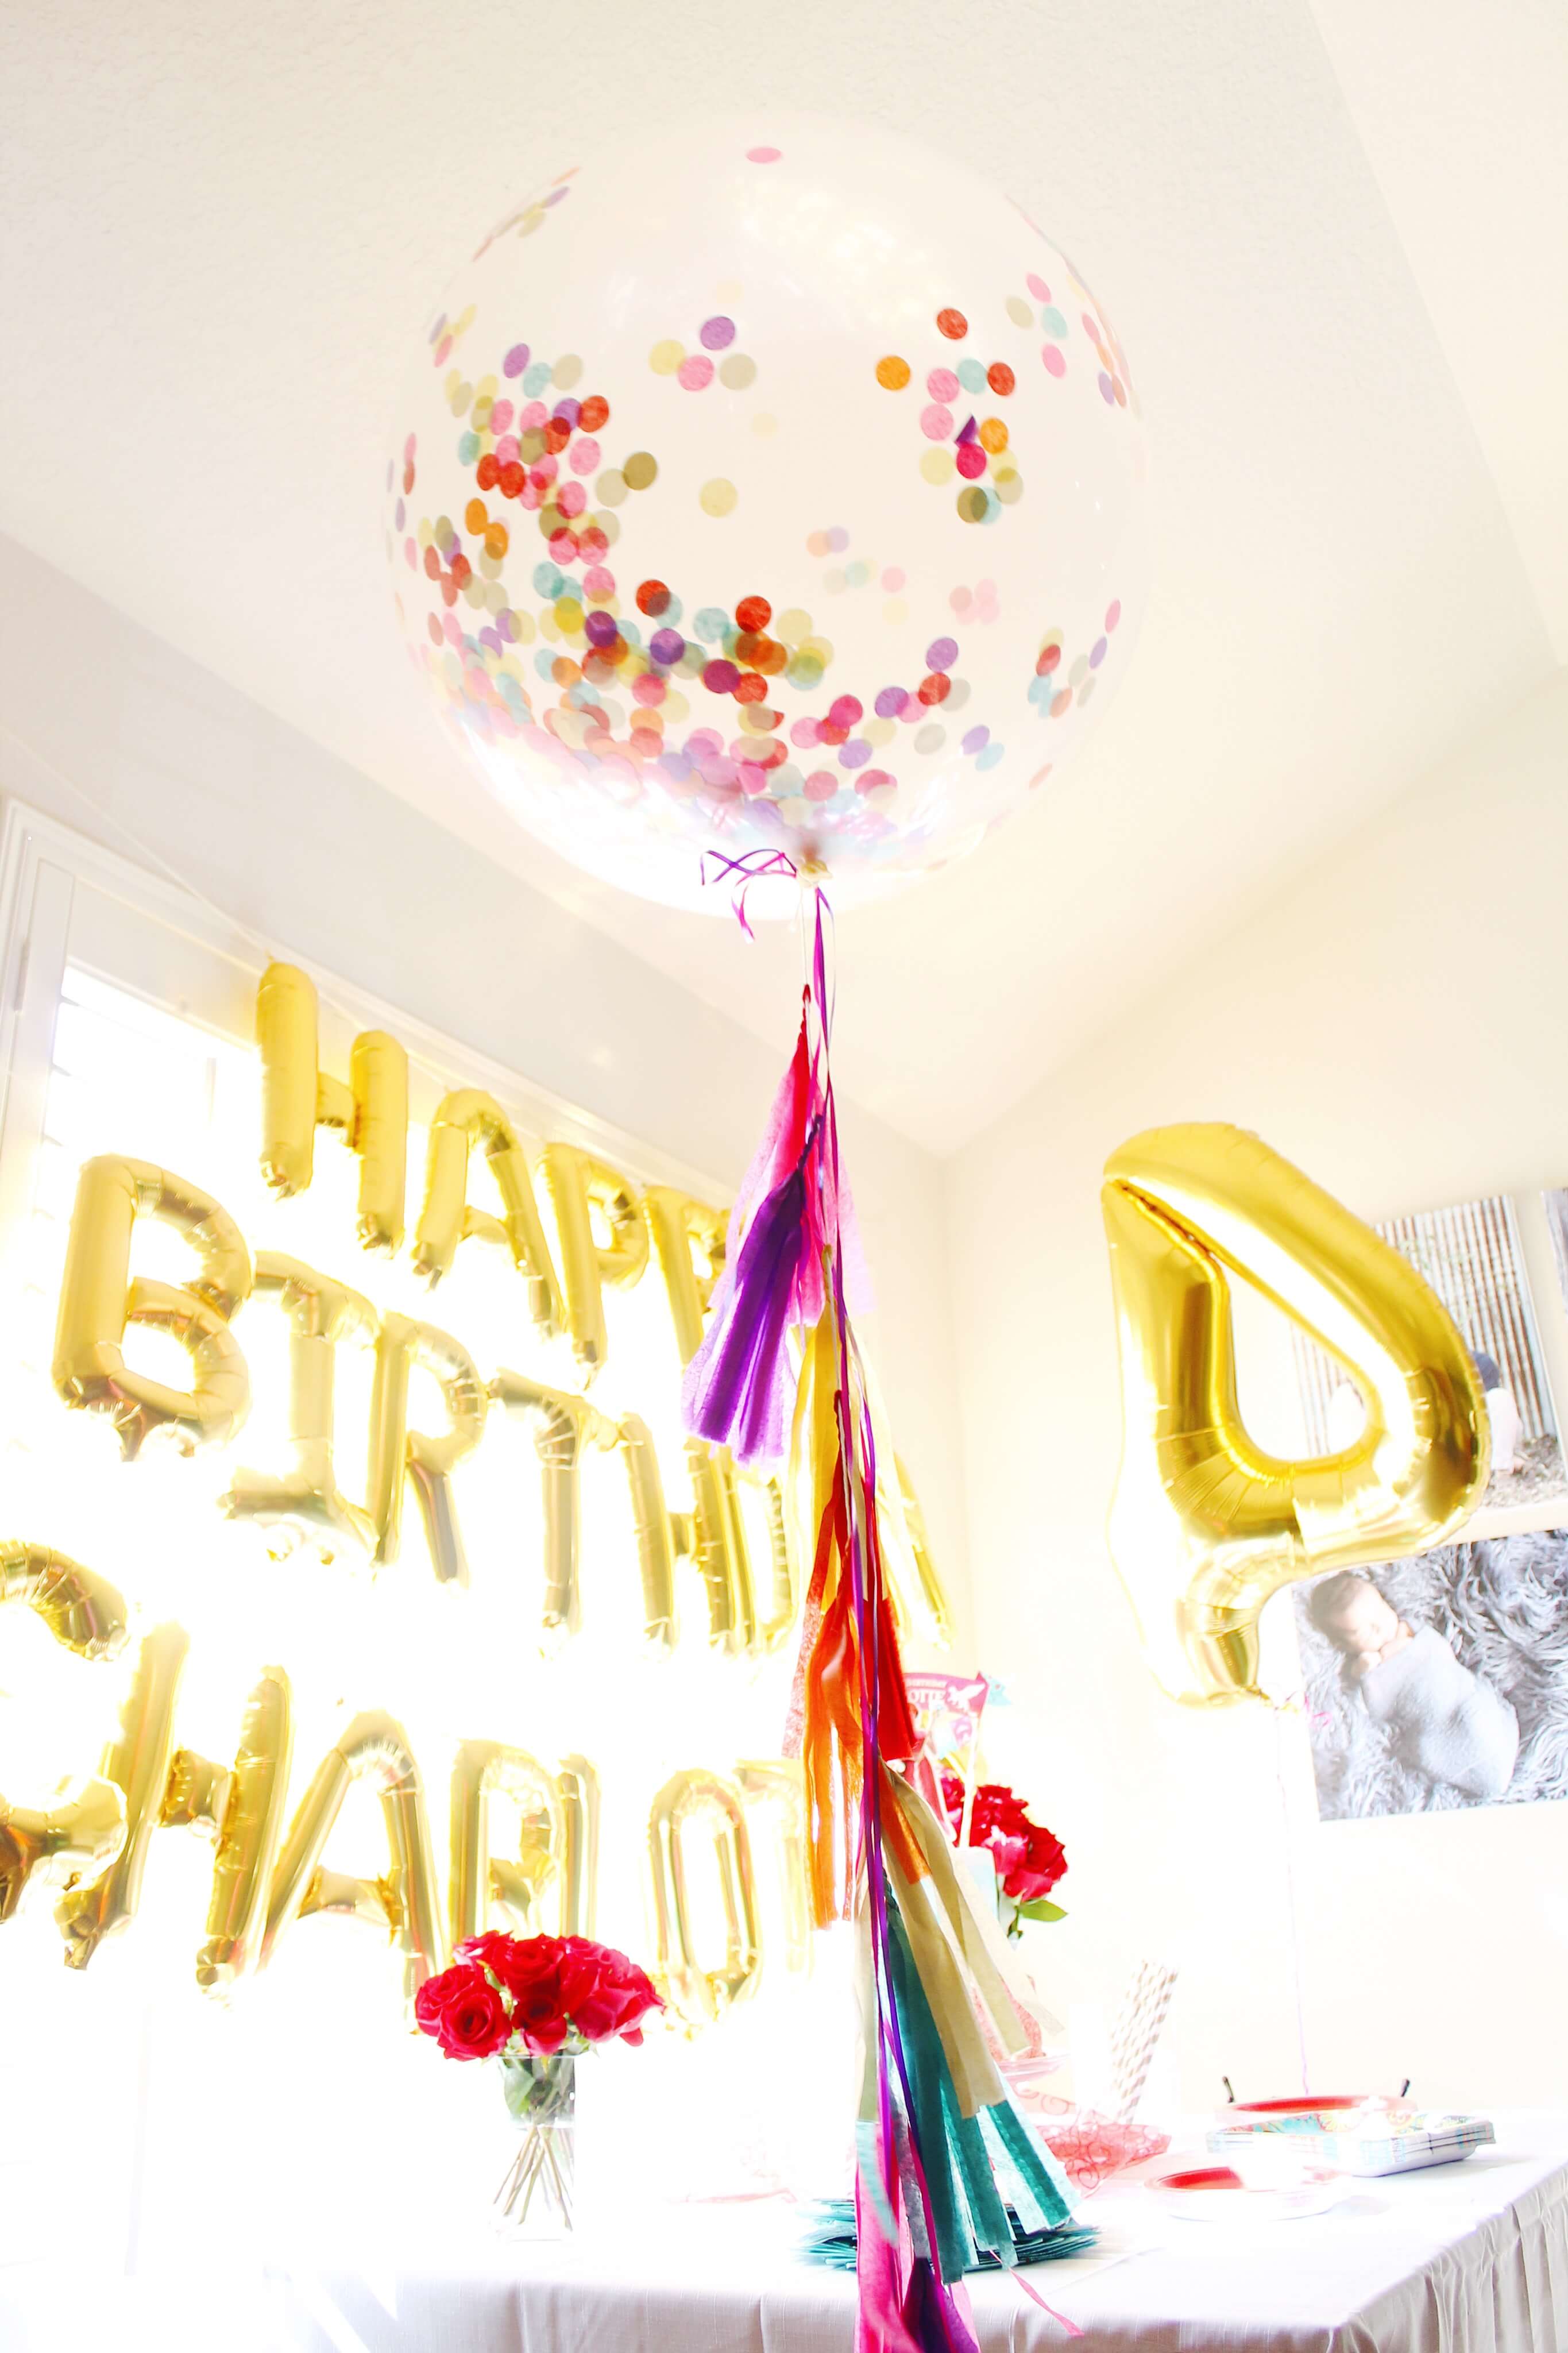 Elena of Avalor birthday party decor. The cutest themed fiesta inspiration.